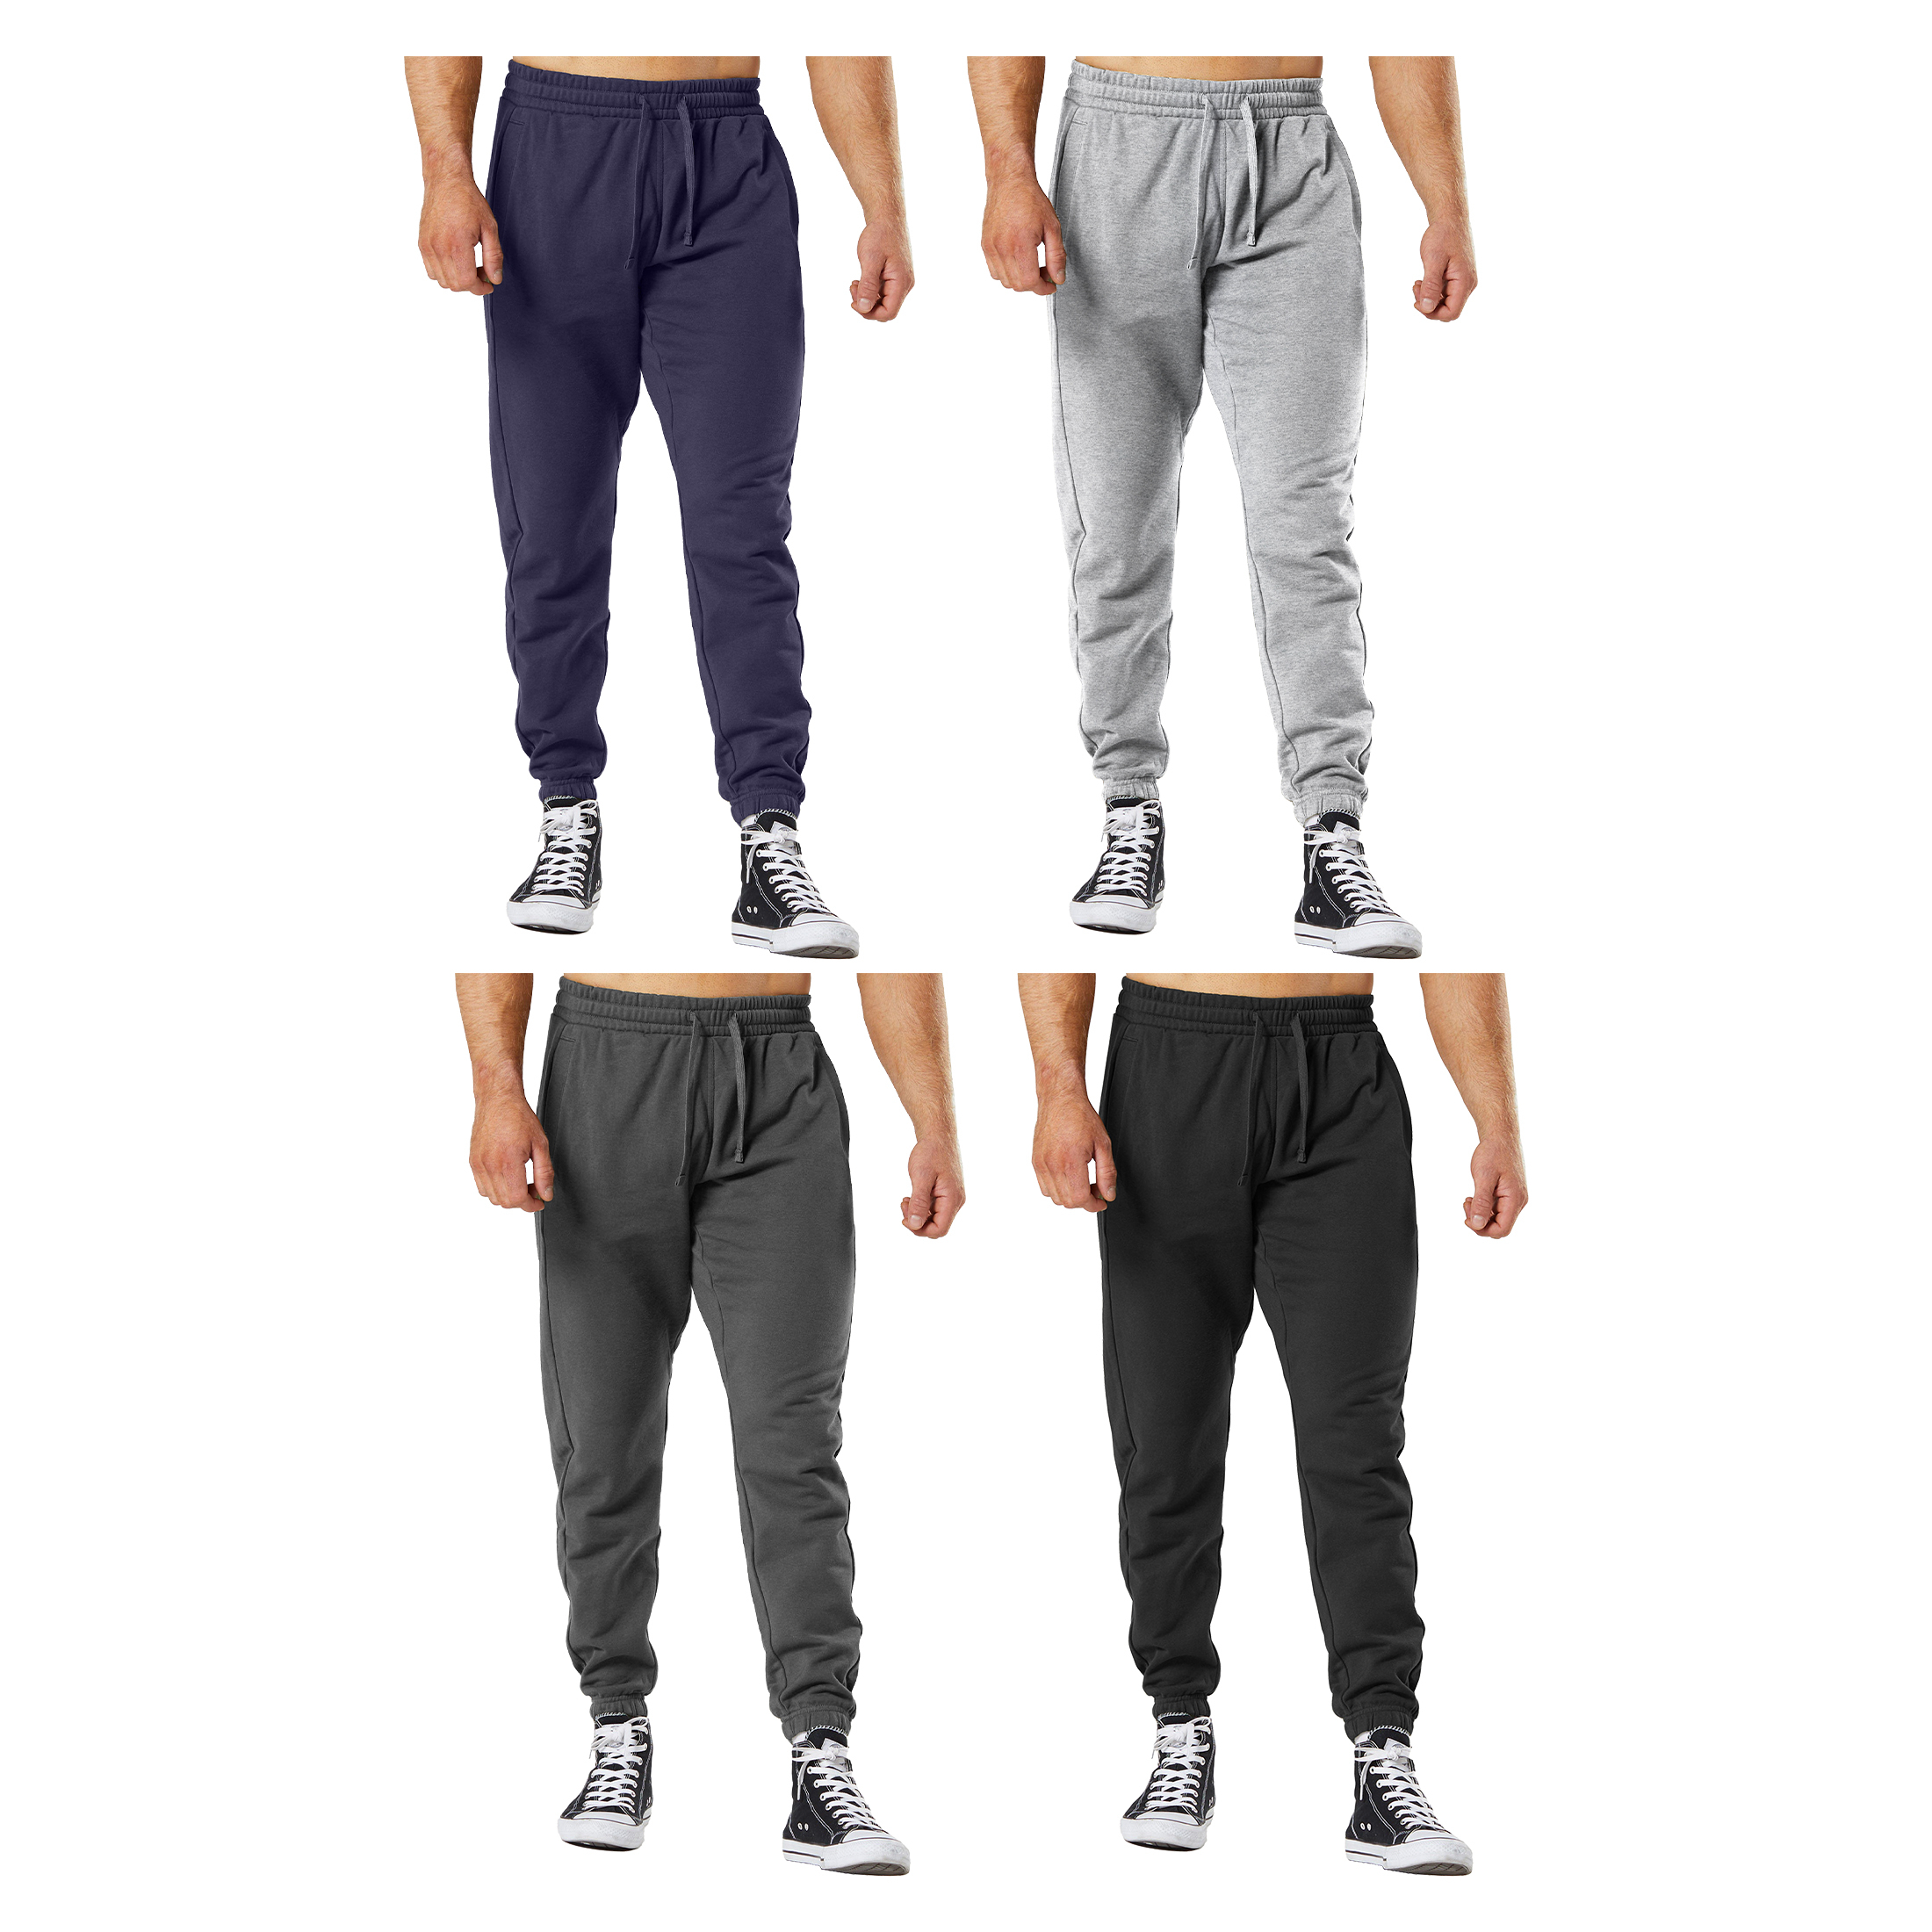 2-Pack: Men's Casual Fleece-Lined Elastic Bottom Jogger Pants With Pockets - Medium